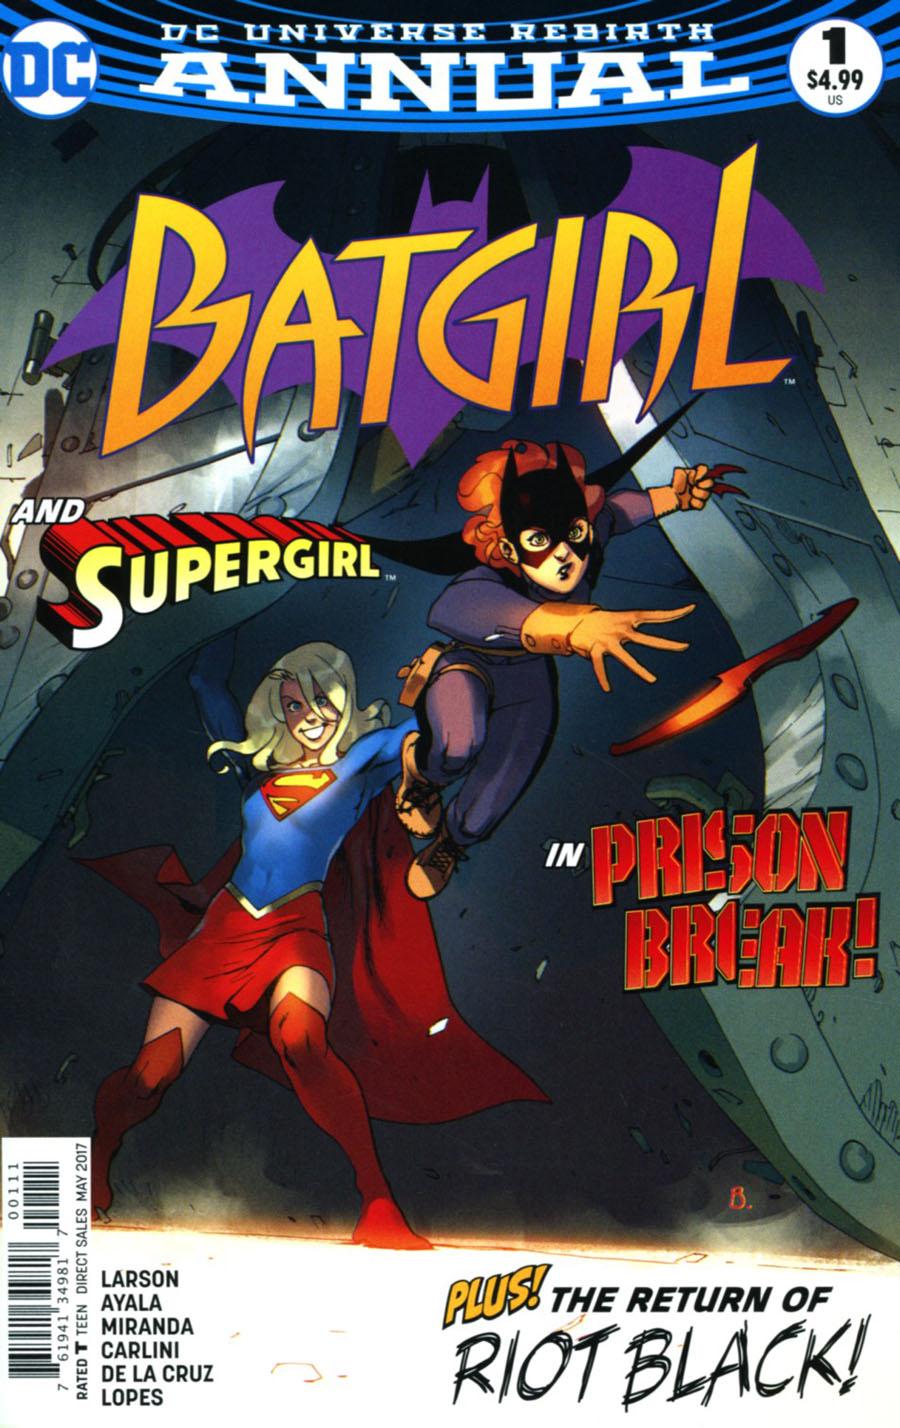 Batgirl Vol. 5 Annual #1